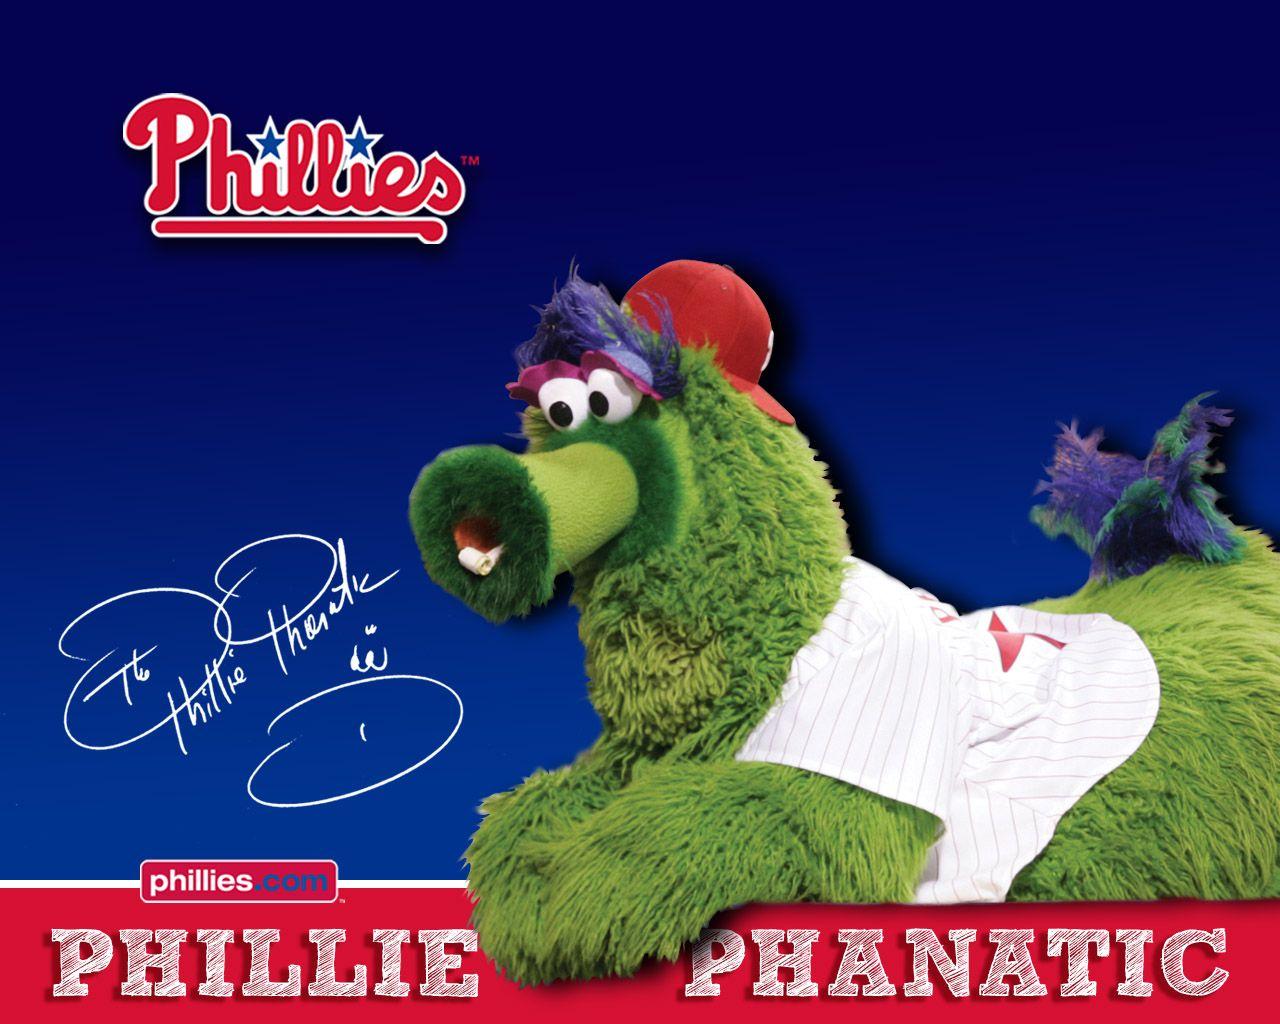 Phillie Phanatic. phillies.com: Fan Forum